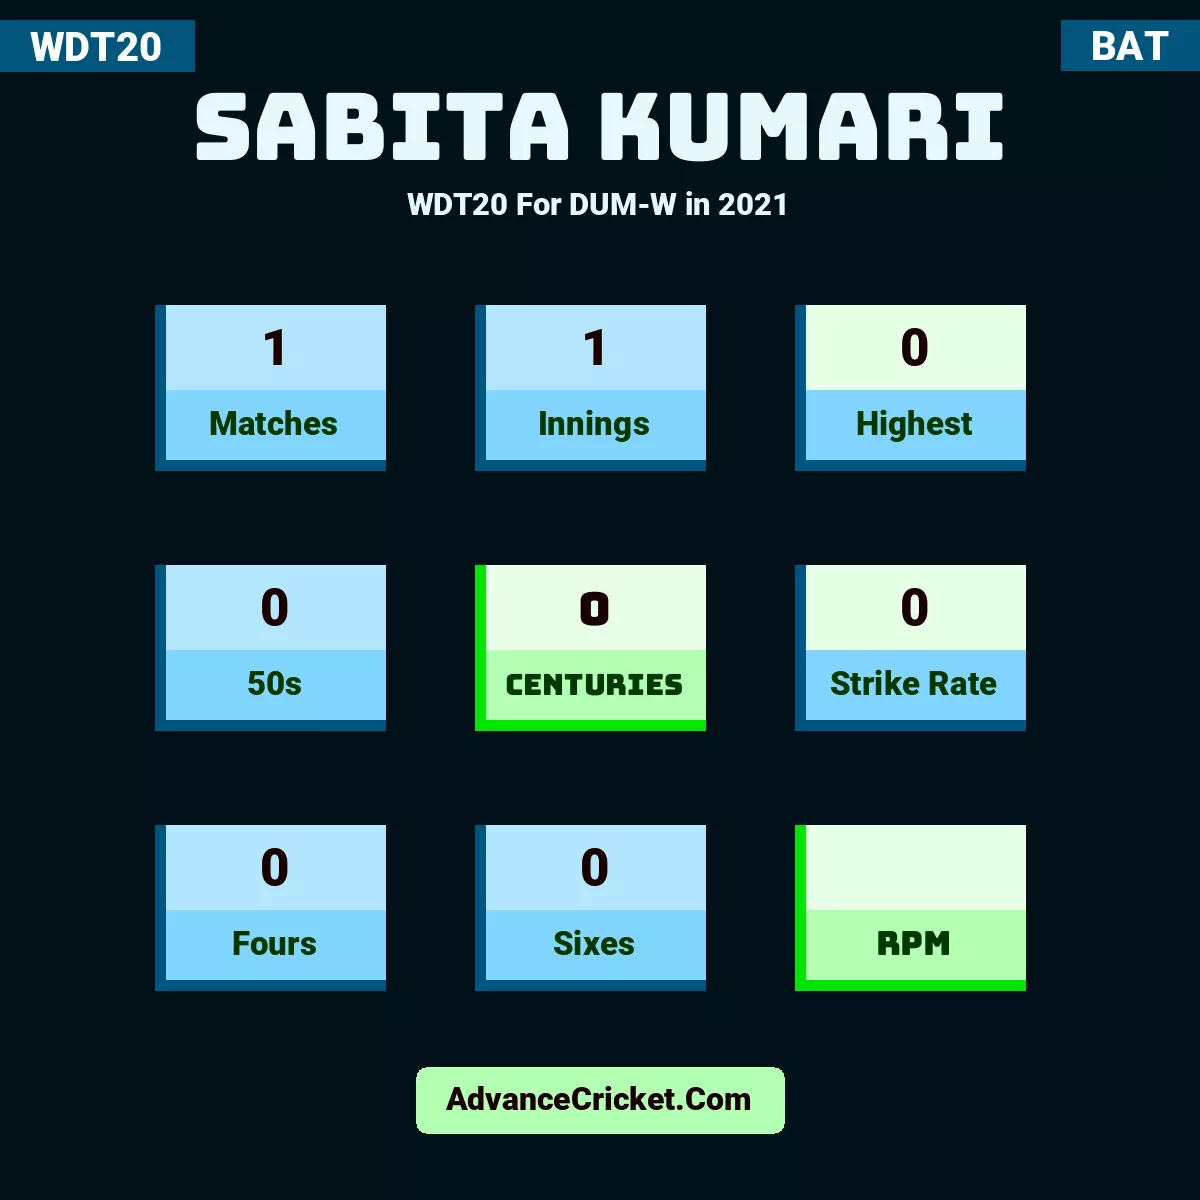 Sabita Kumari WDT20  For DUM-W in 2021, Sabita Kumari played 1 matches, scored 0 runs as highest, 0 half-centuries, and 0 centuries, with a strike rate of 0. S.Kumari hit 0 fours and 0 sixes.